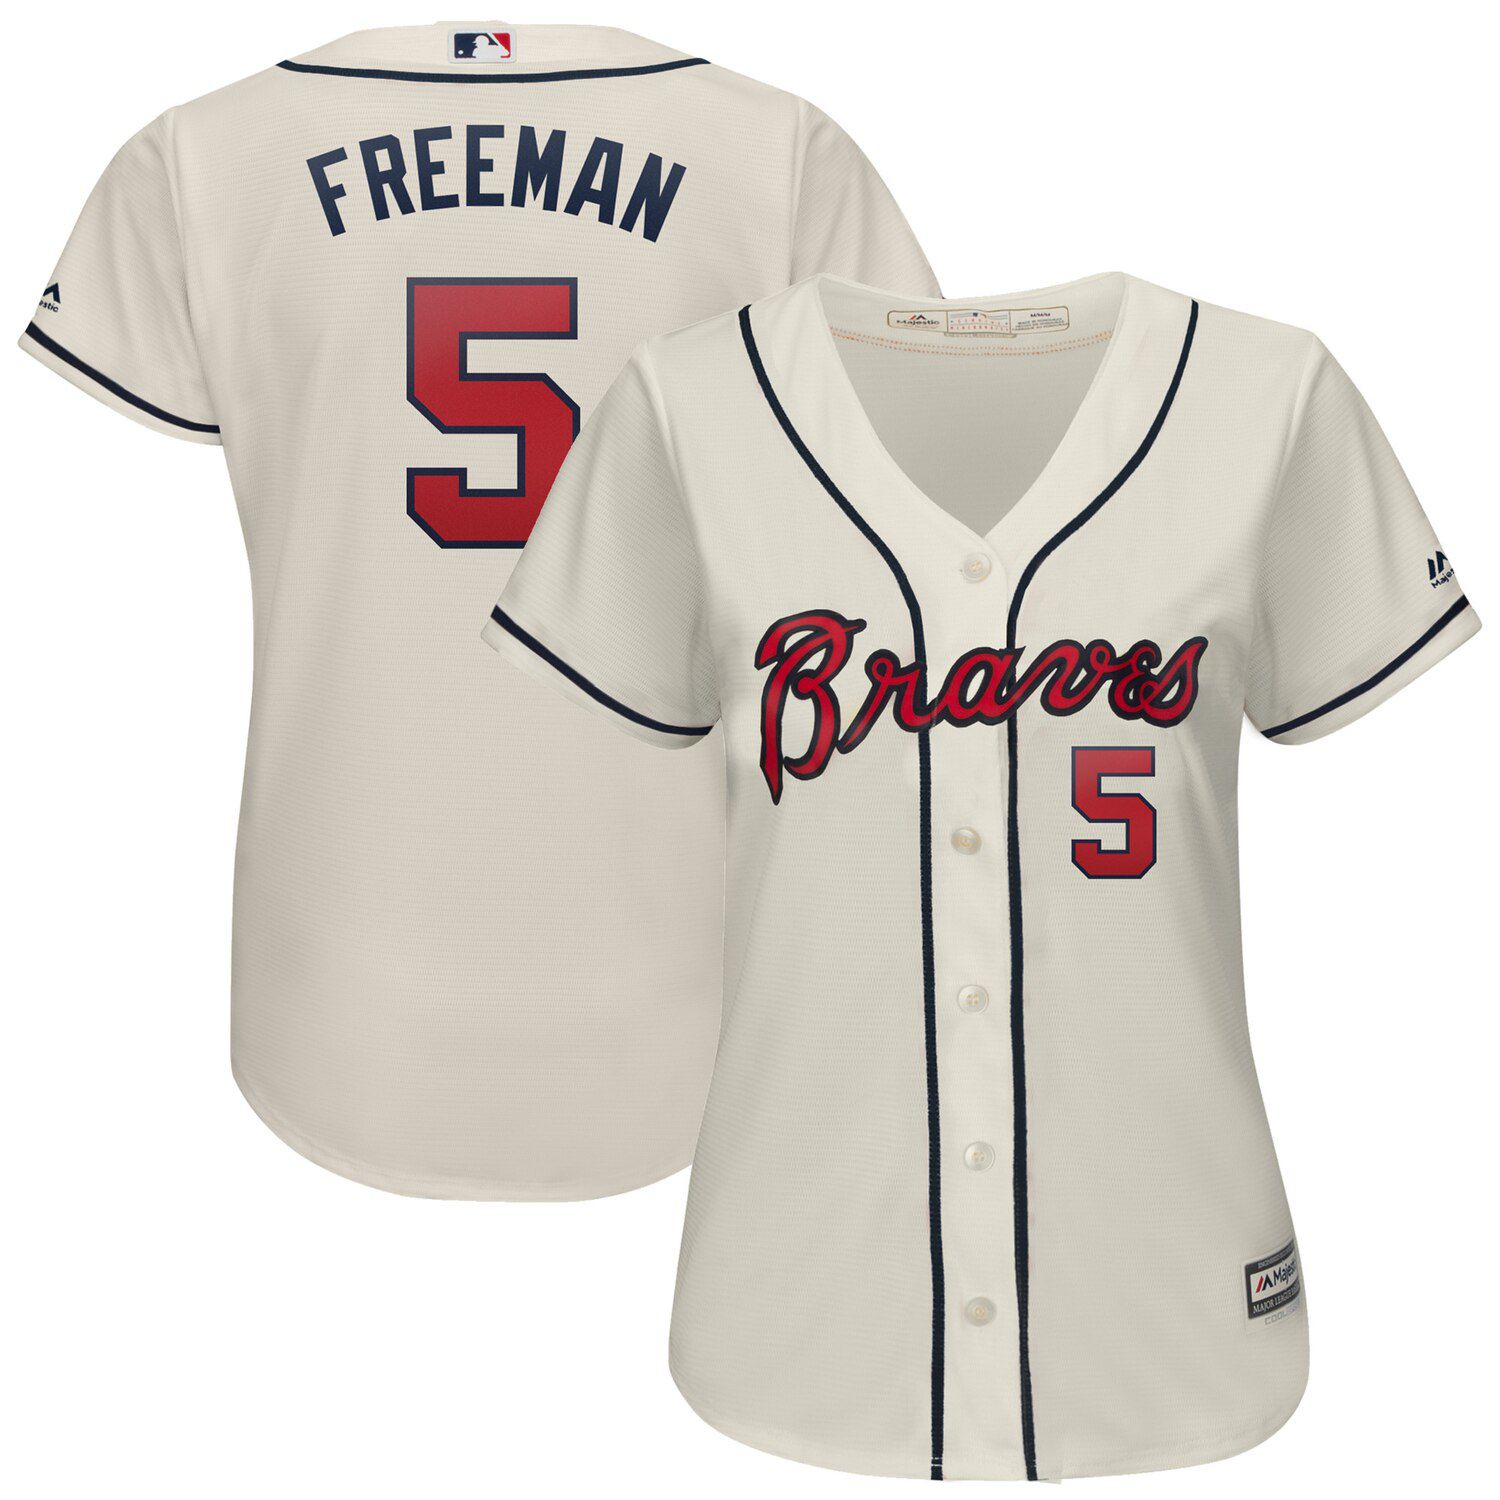 freeman jersey braves